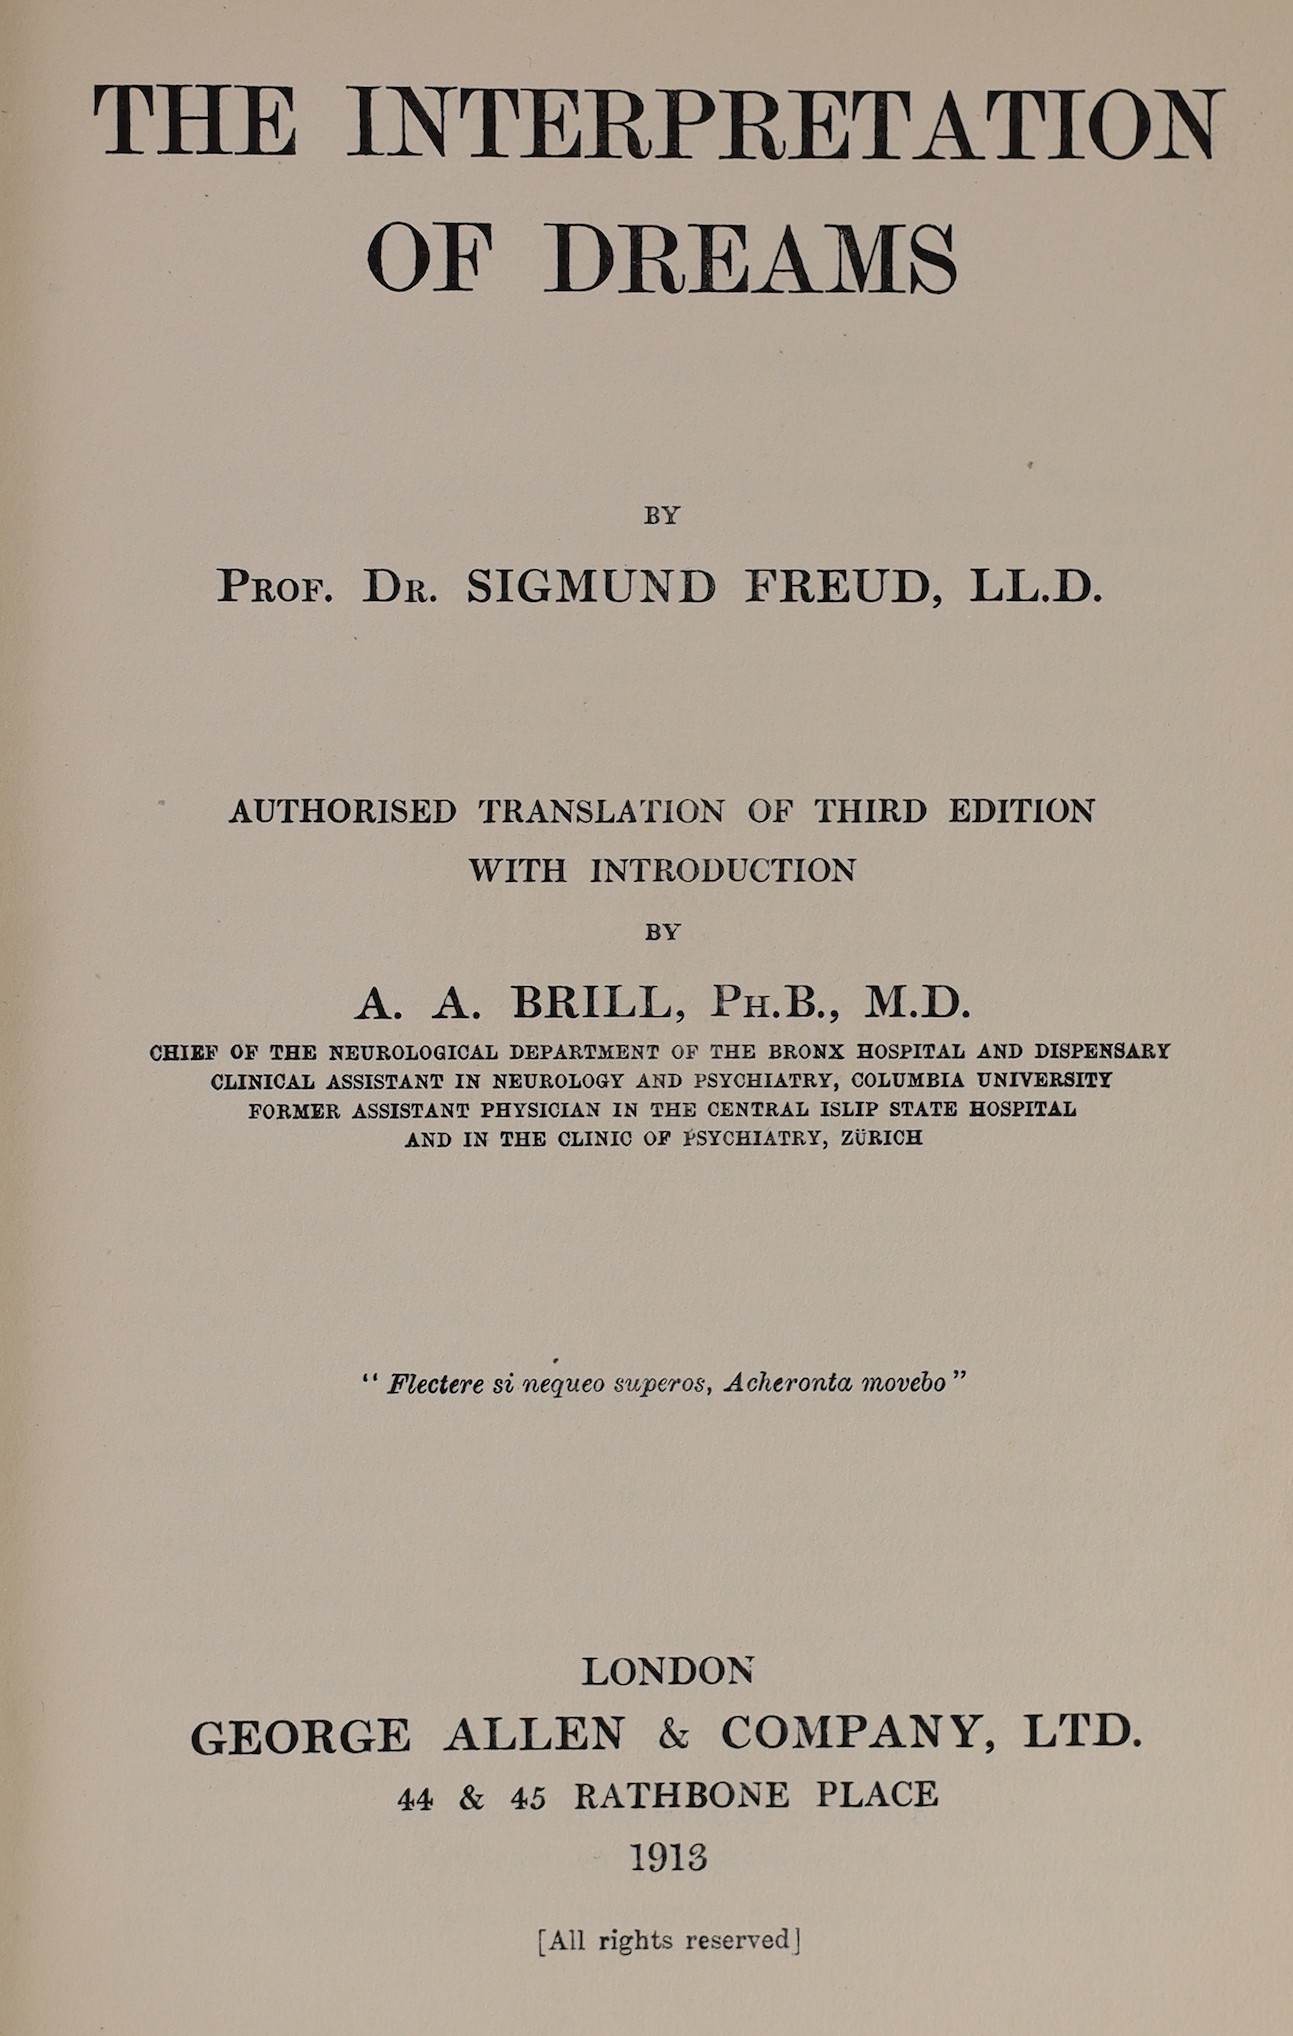 Freud, Sigmund - The Interpretation of Dreams, 1st edition in English, 8vo, original cloth, George Allen, London, 1913